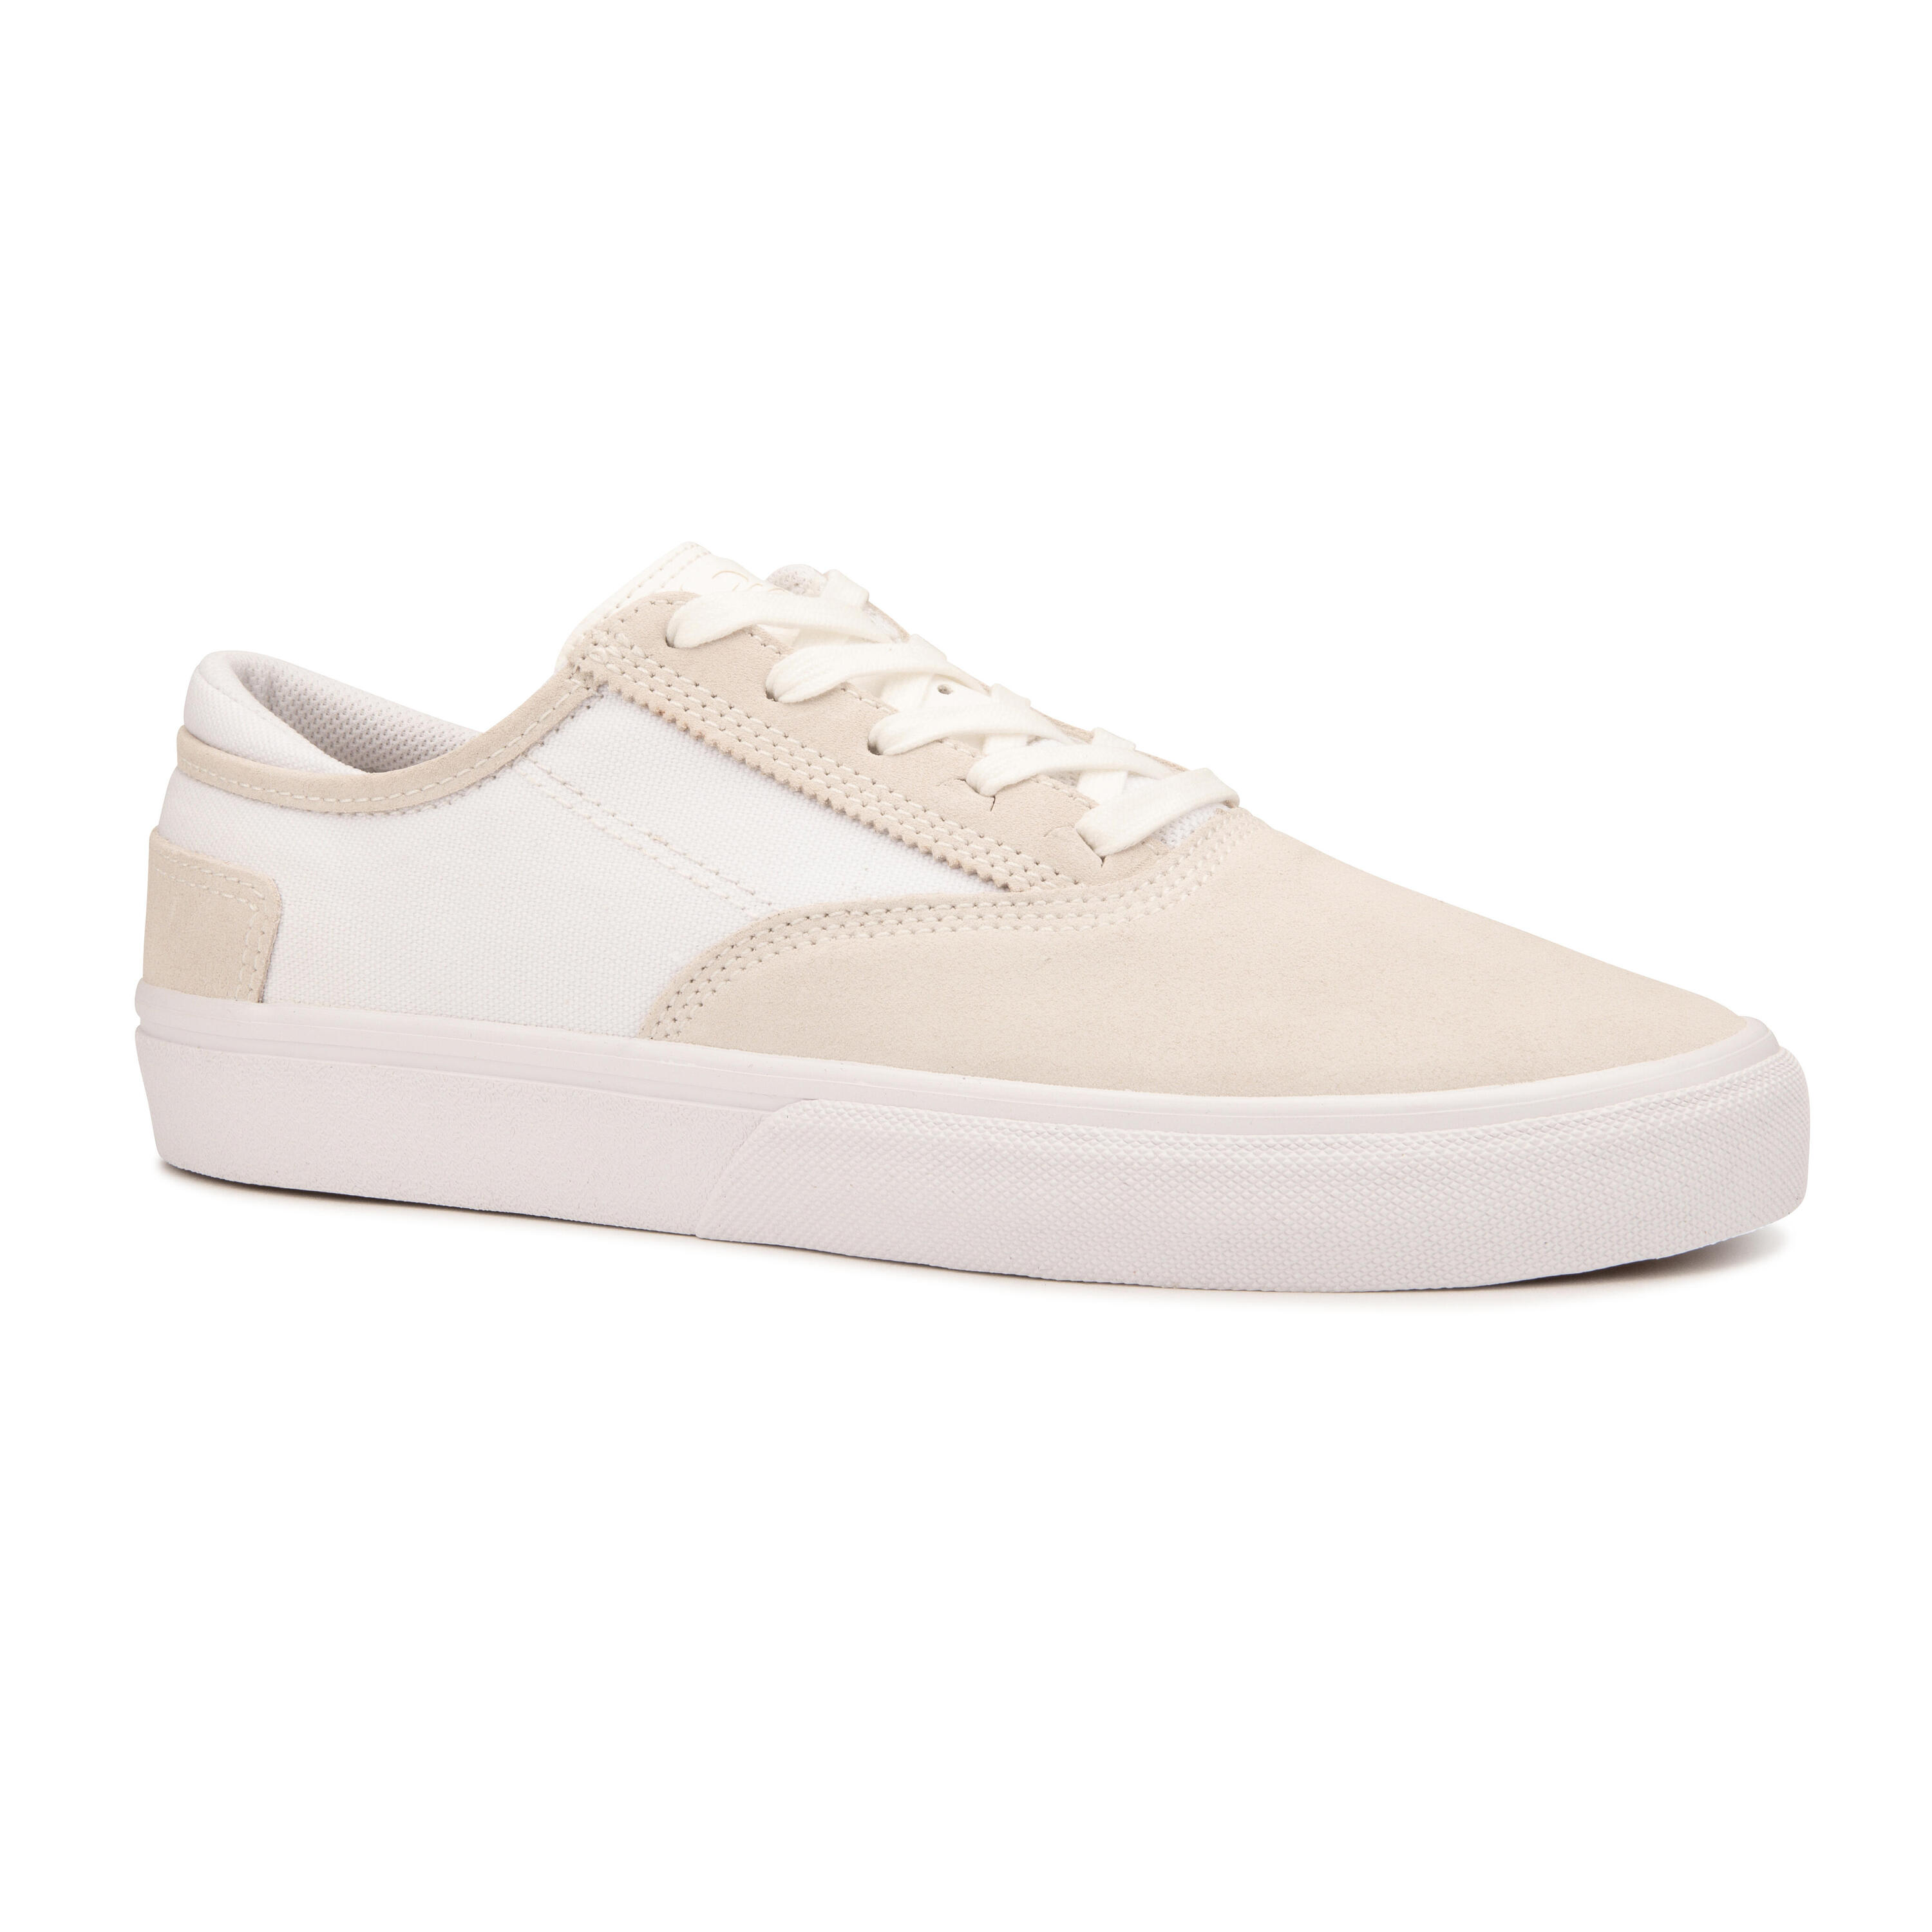 Adult Vulcanised Skate Shoes Vulca 500 II - White/White 1/18